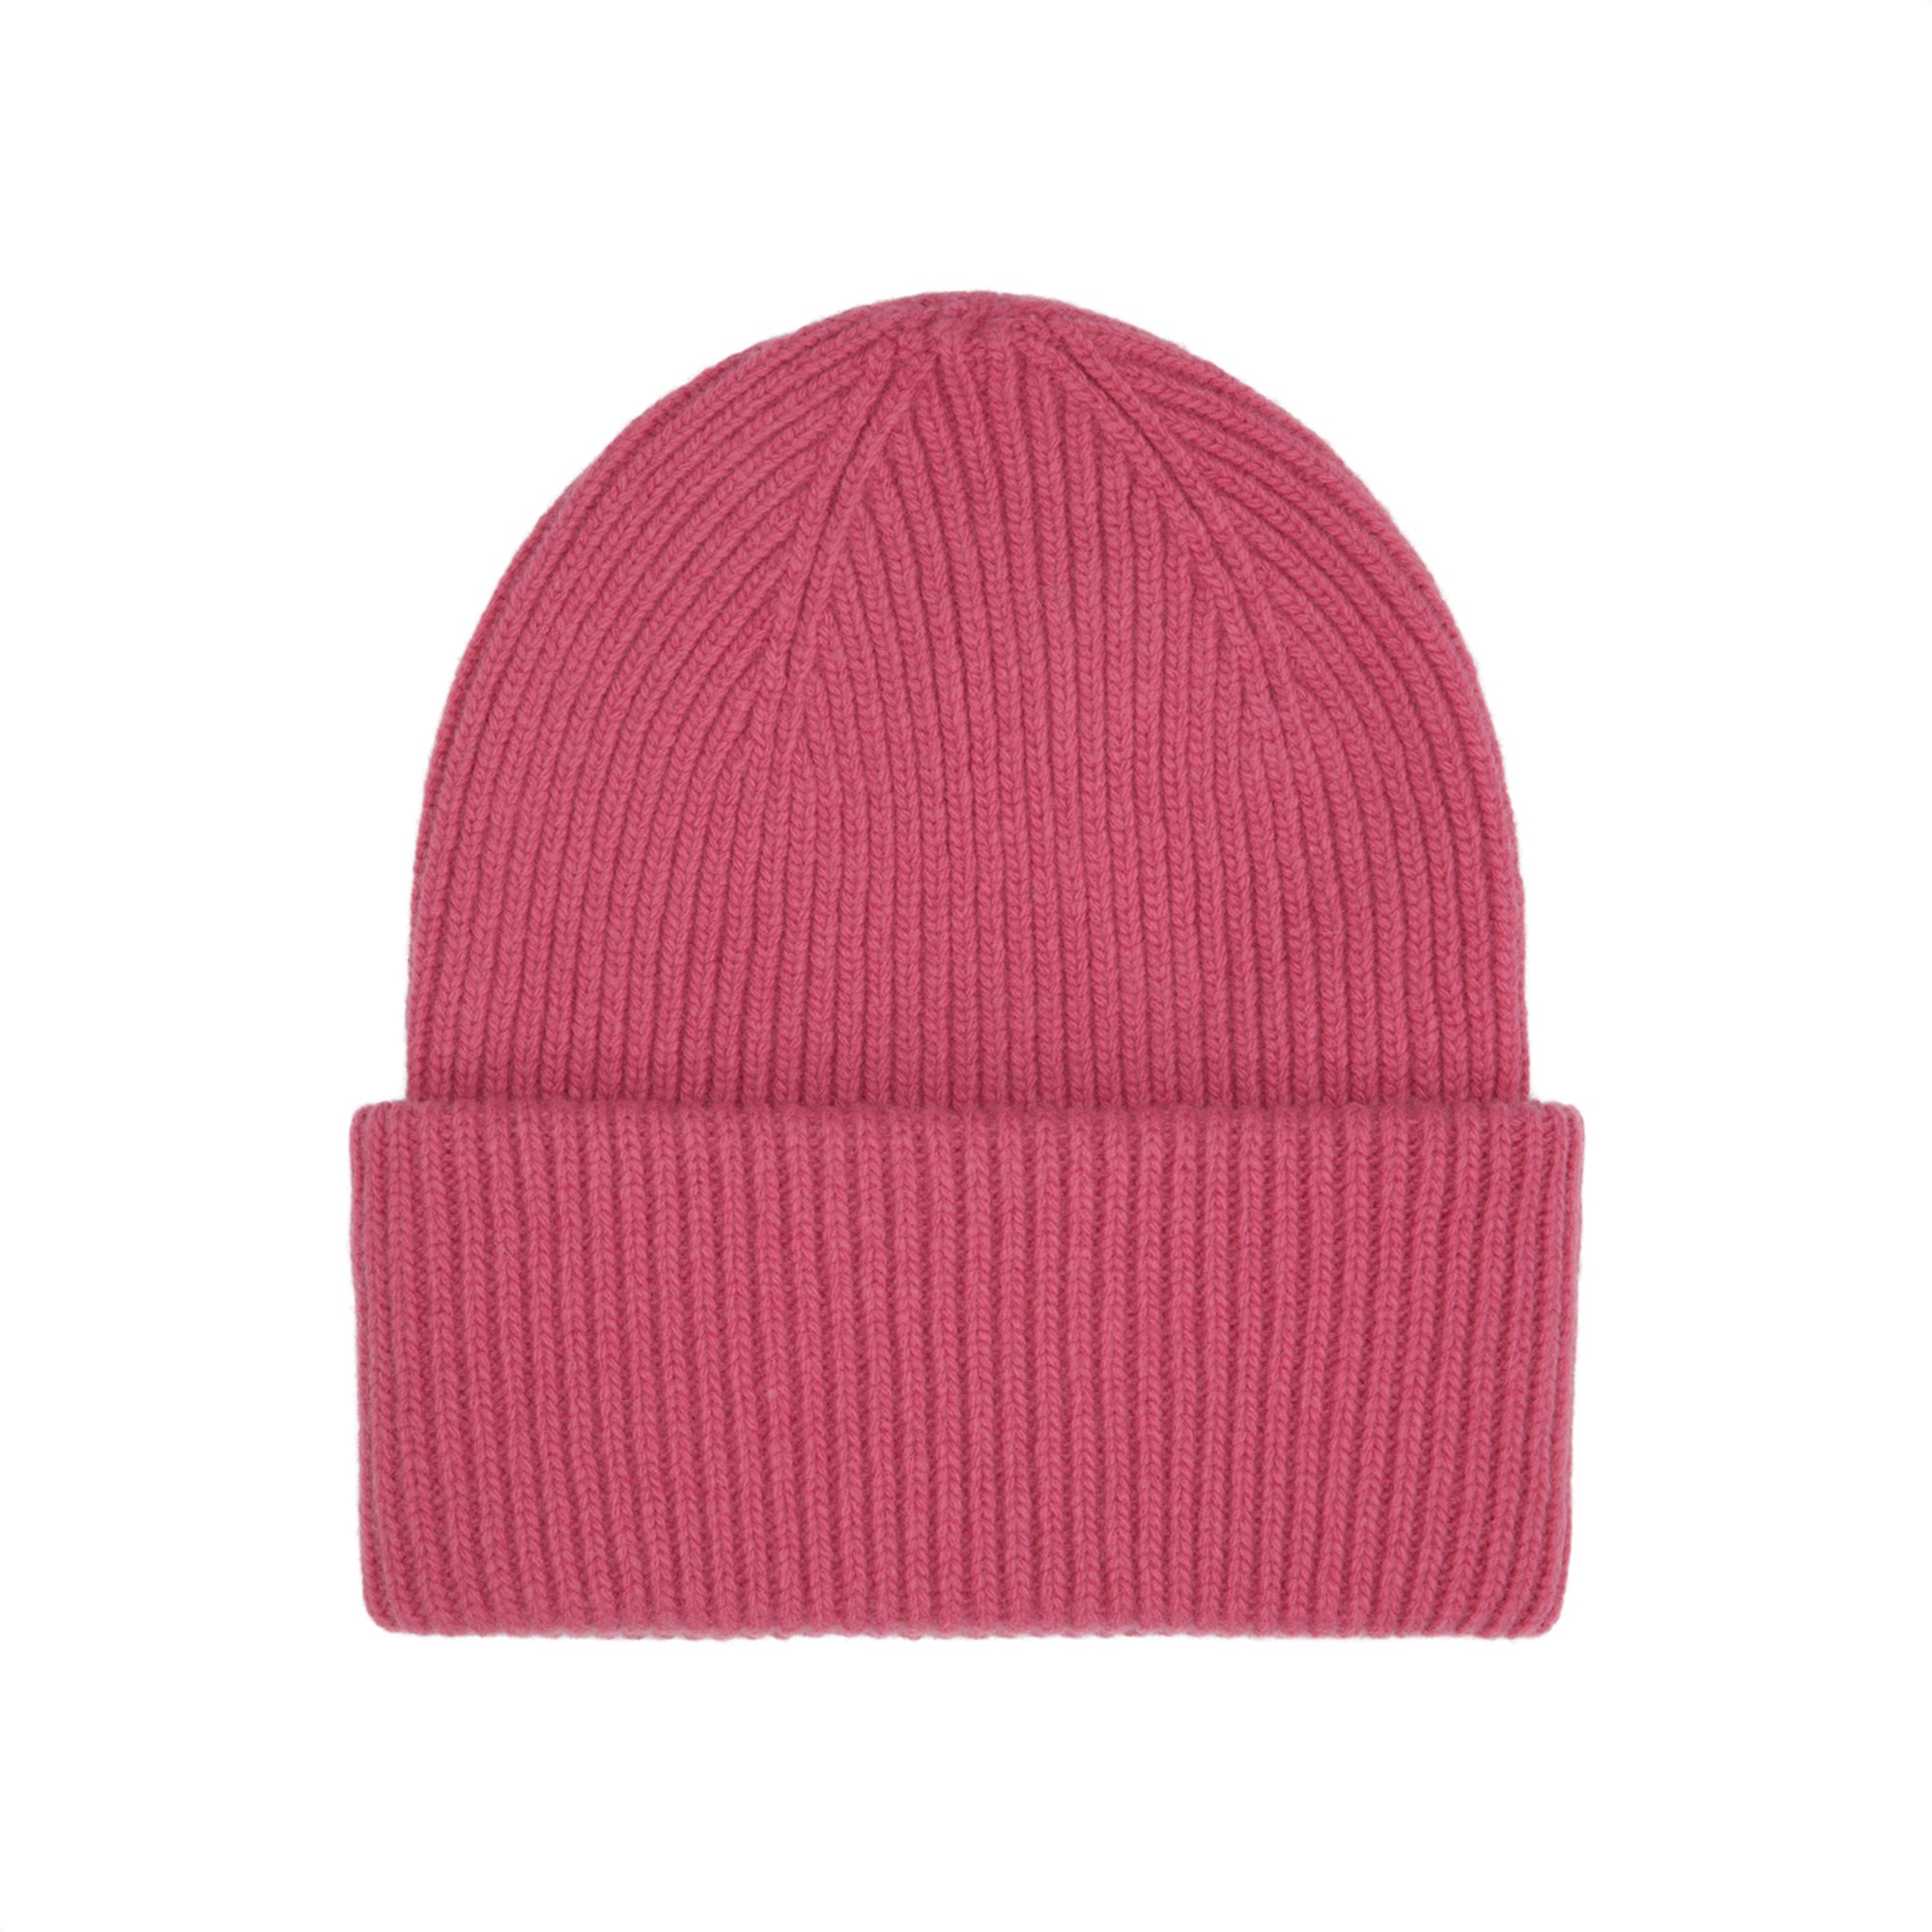 Colorful Standard Merino Wool Hat - Raspberry Pink